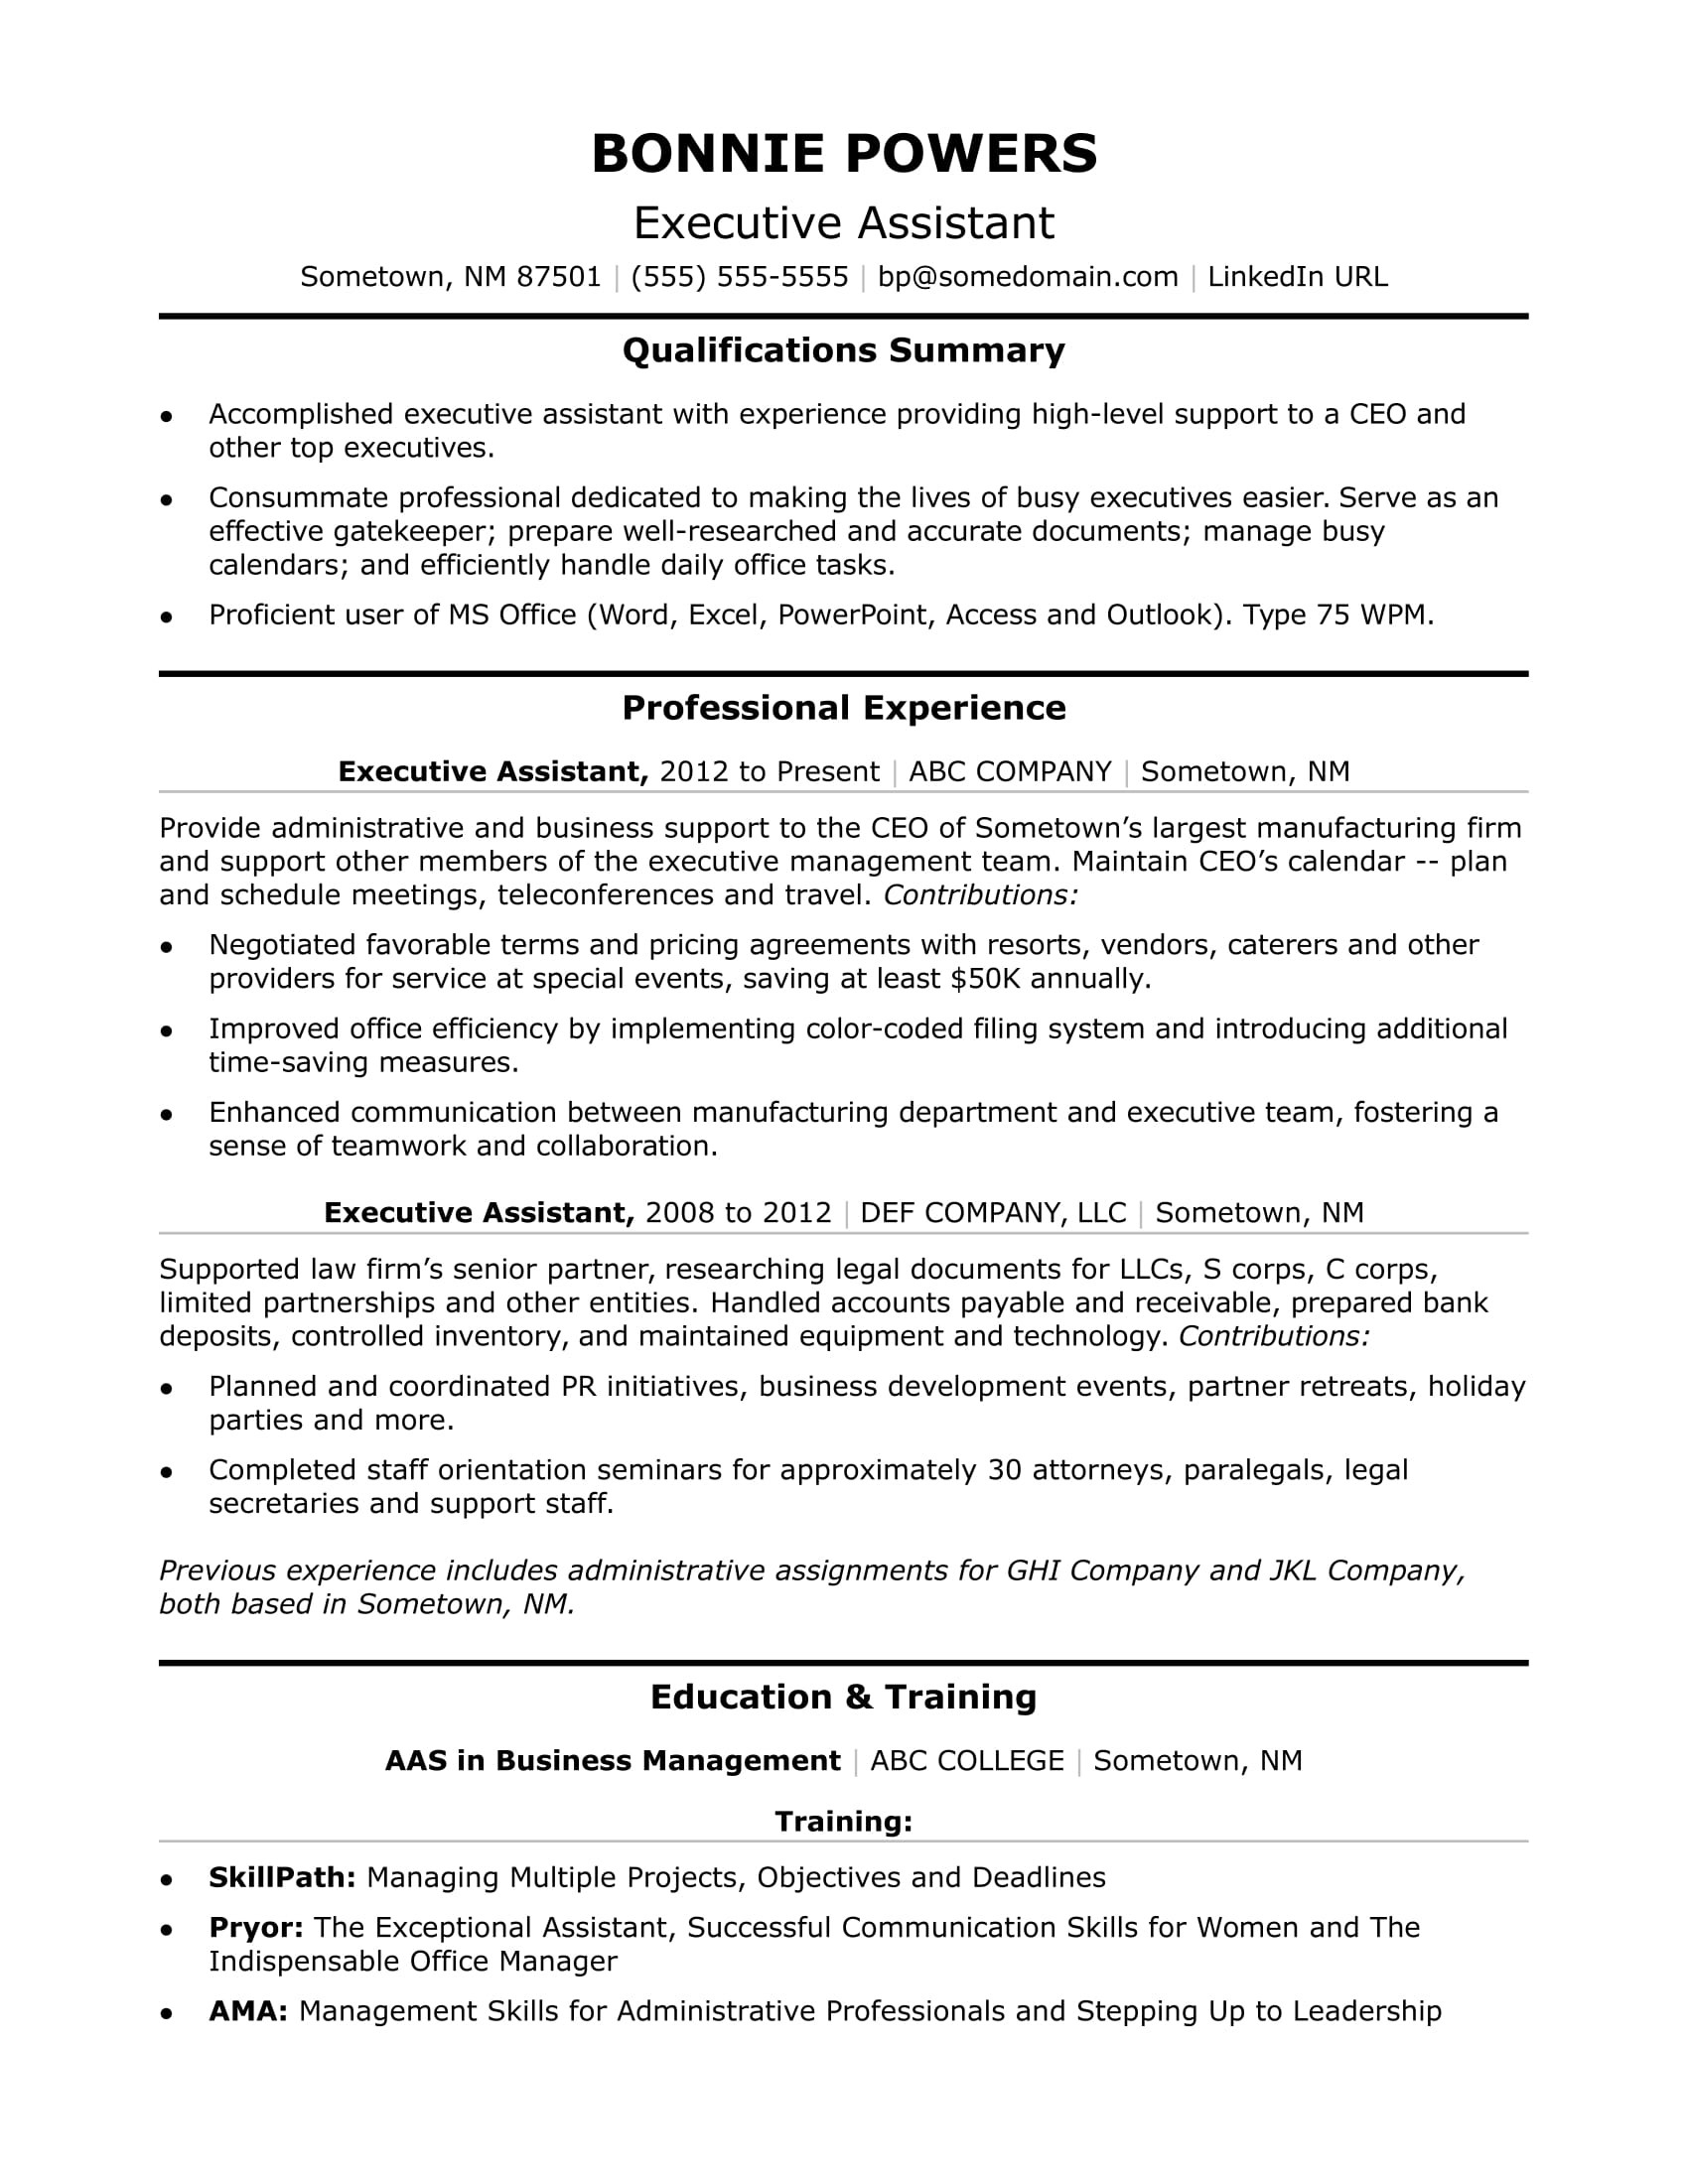 Sample Resume for Senior Level Executive assistant Executive assistant Resume Monster.com